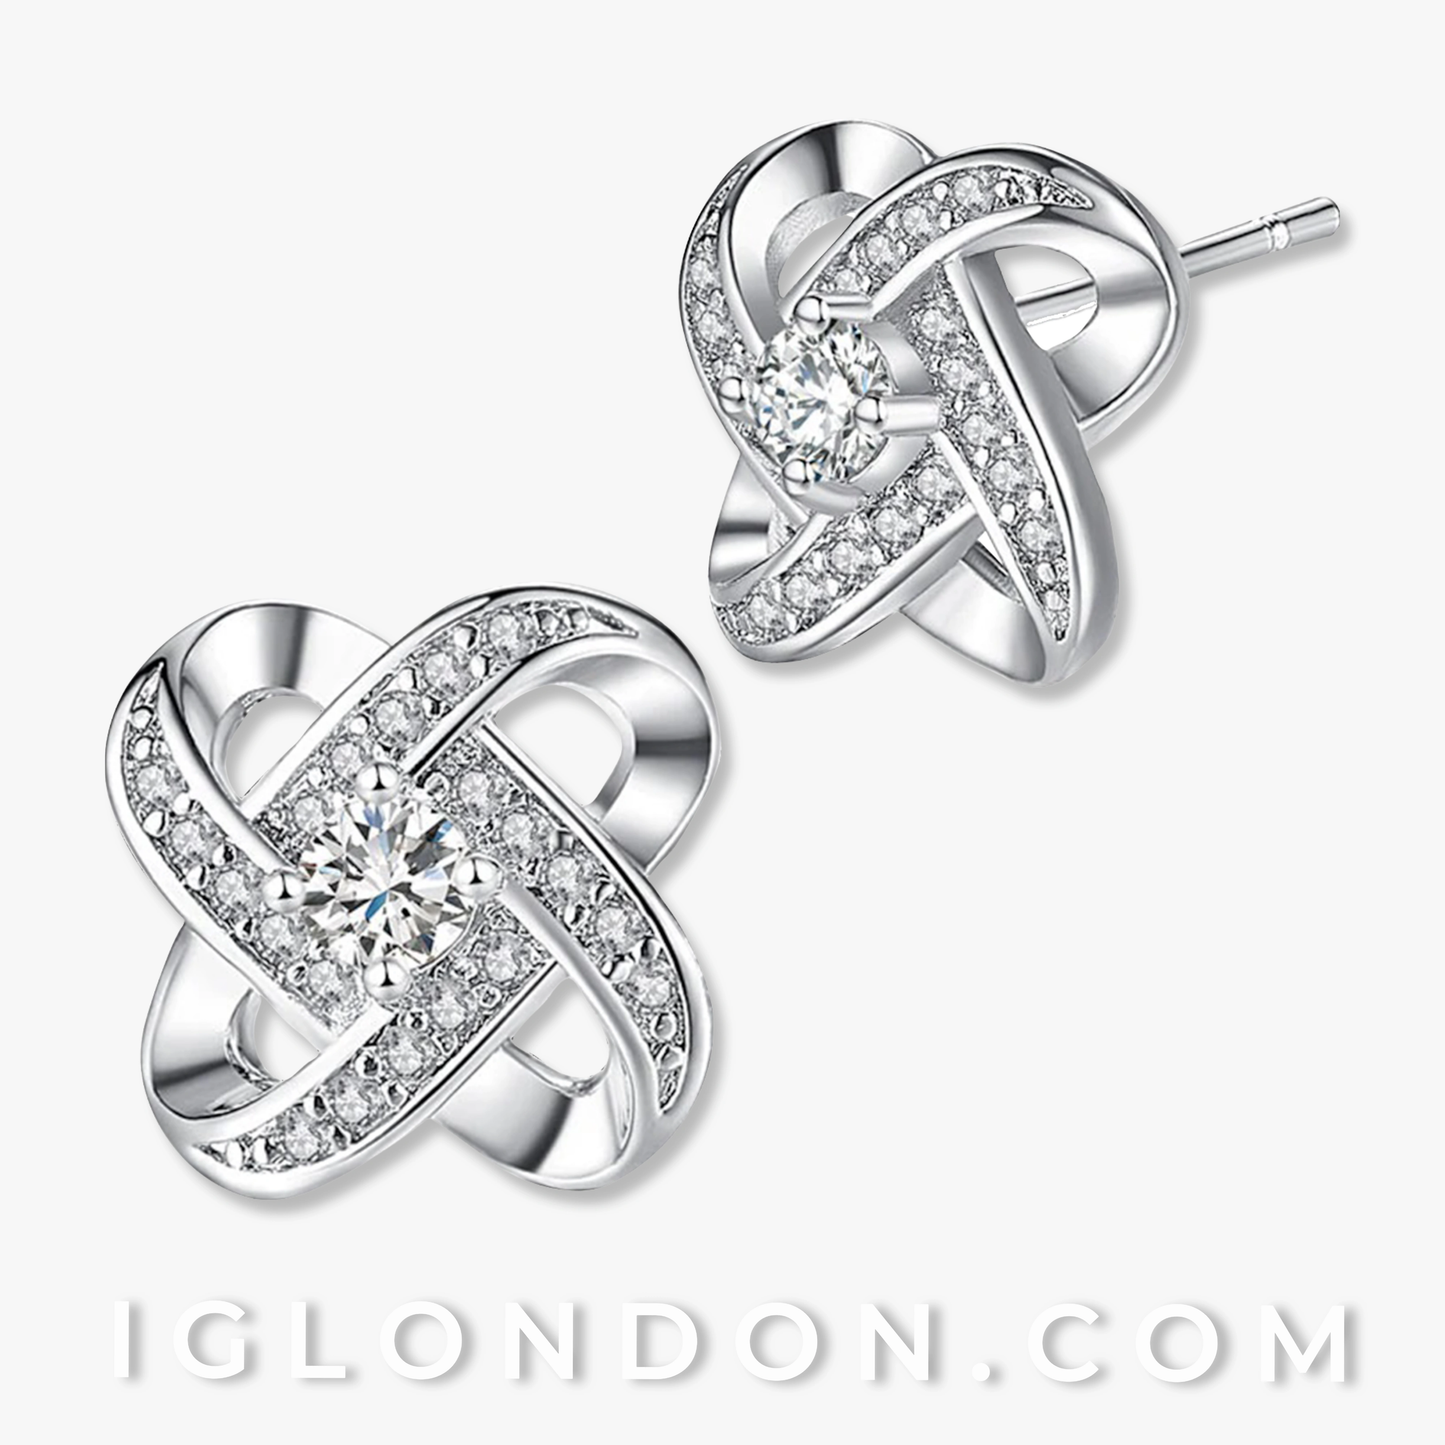 knot of friendship earrings Friendship knot earrings. - IGLondon.com IGLondonByElissa , 925, birthstones, crystal, gemstones, mother, mothers, new, sterling silver